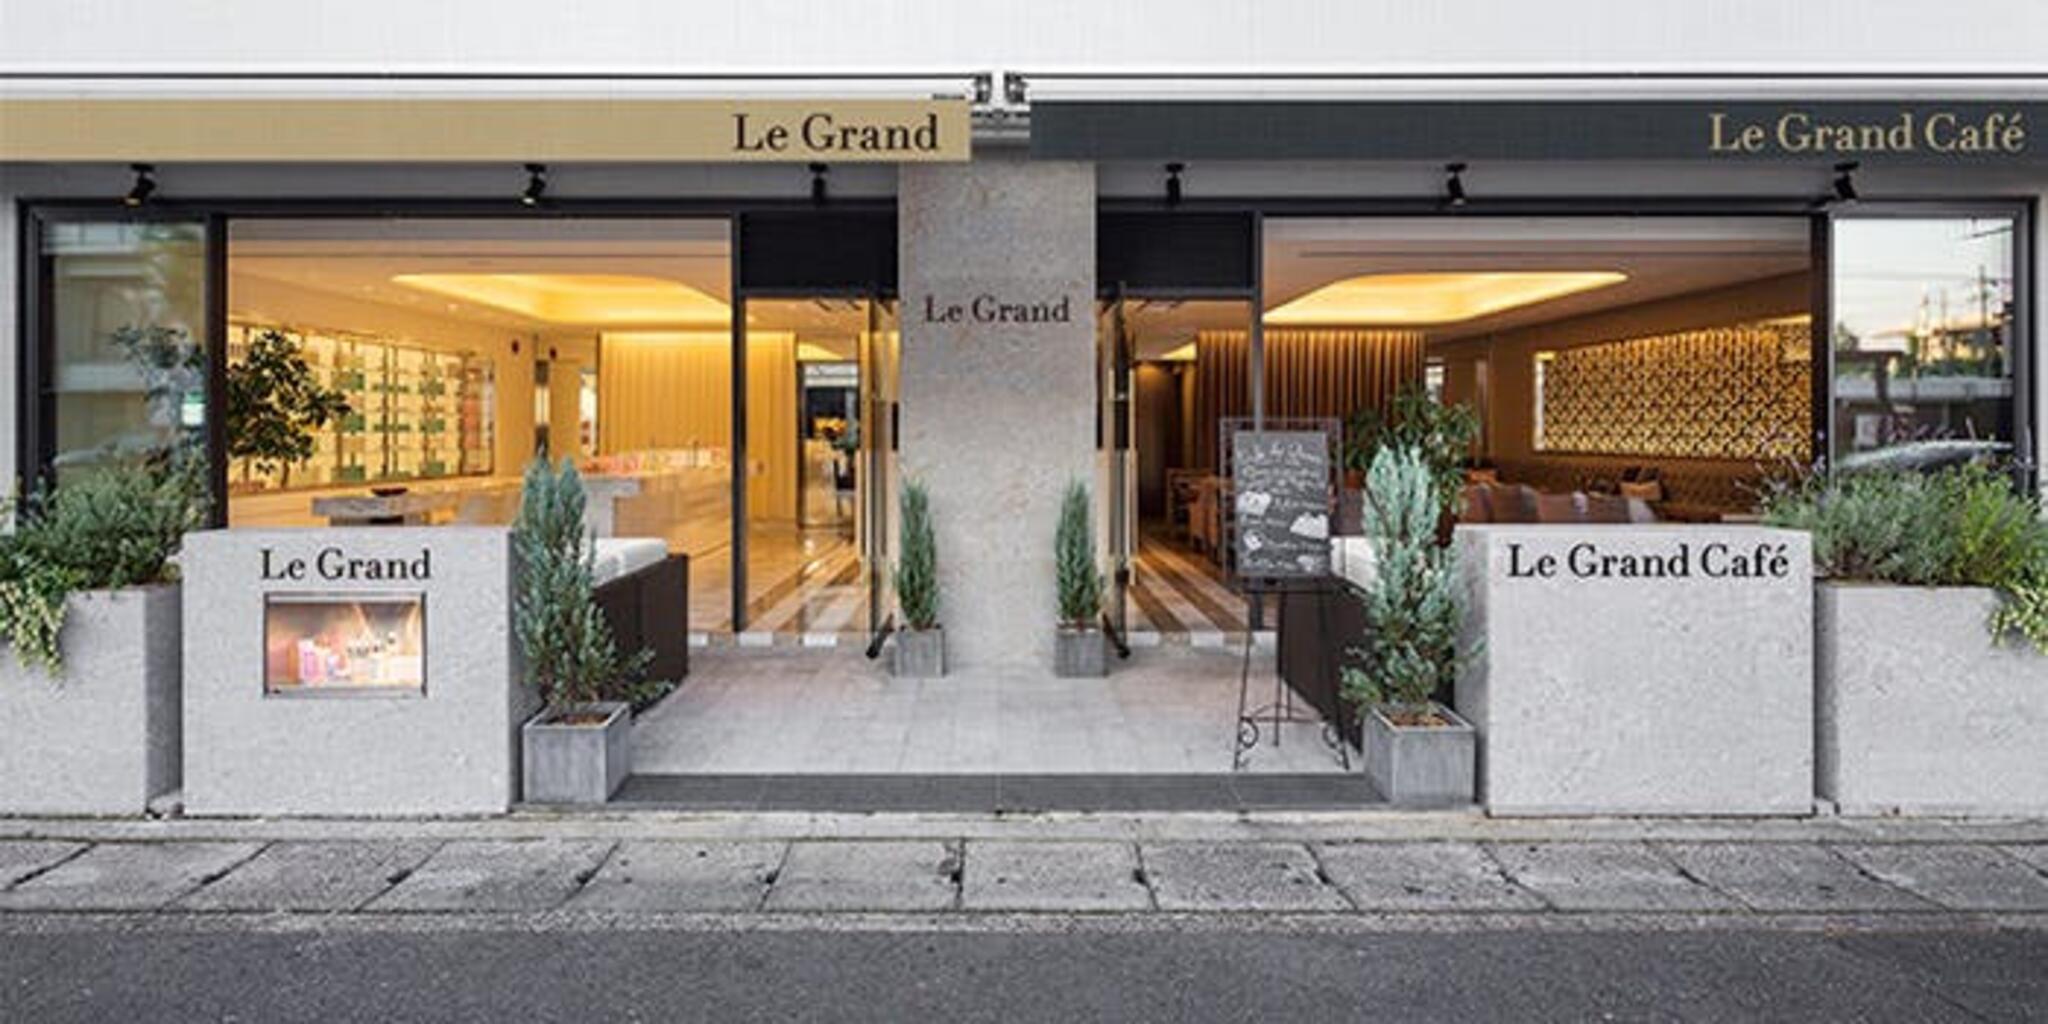 Le Grand Cafeの代表写真3